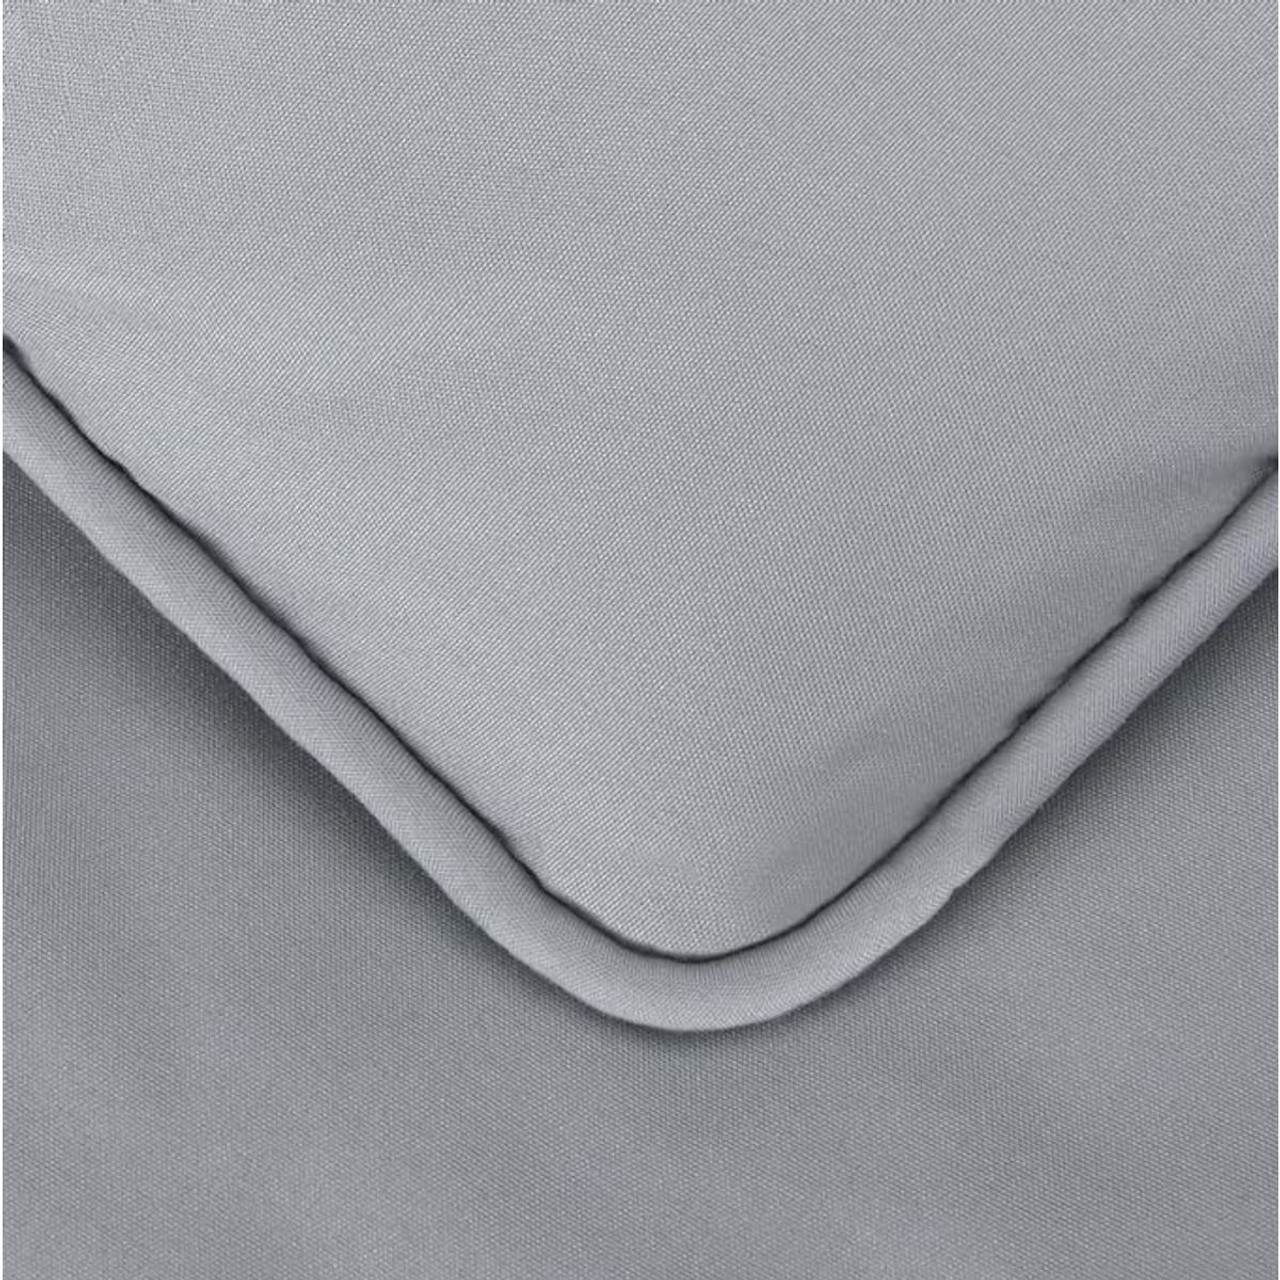 King Microfiber Pinch Pleat Duvet Cover Set by Amazon Basics® product image